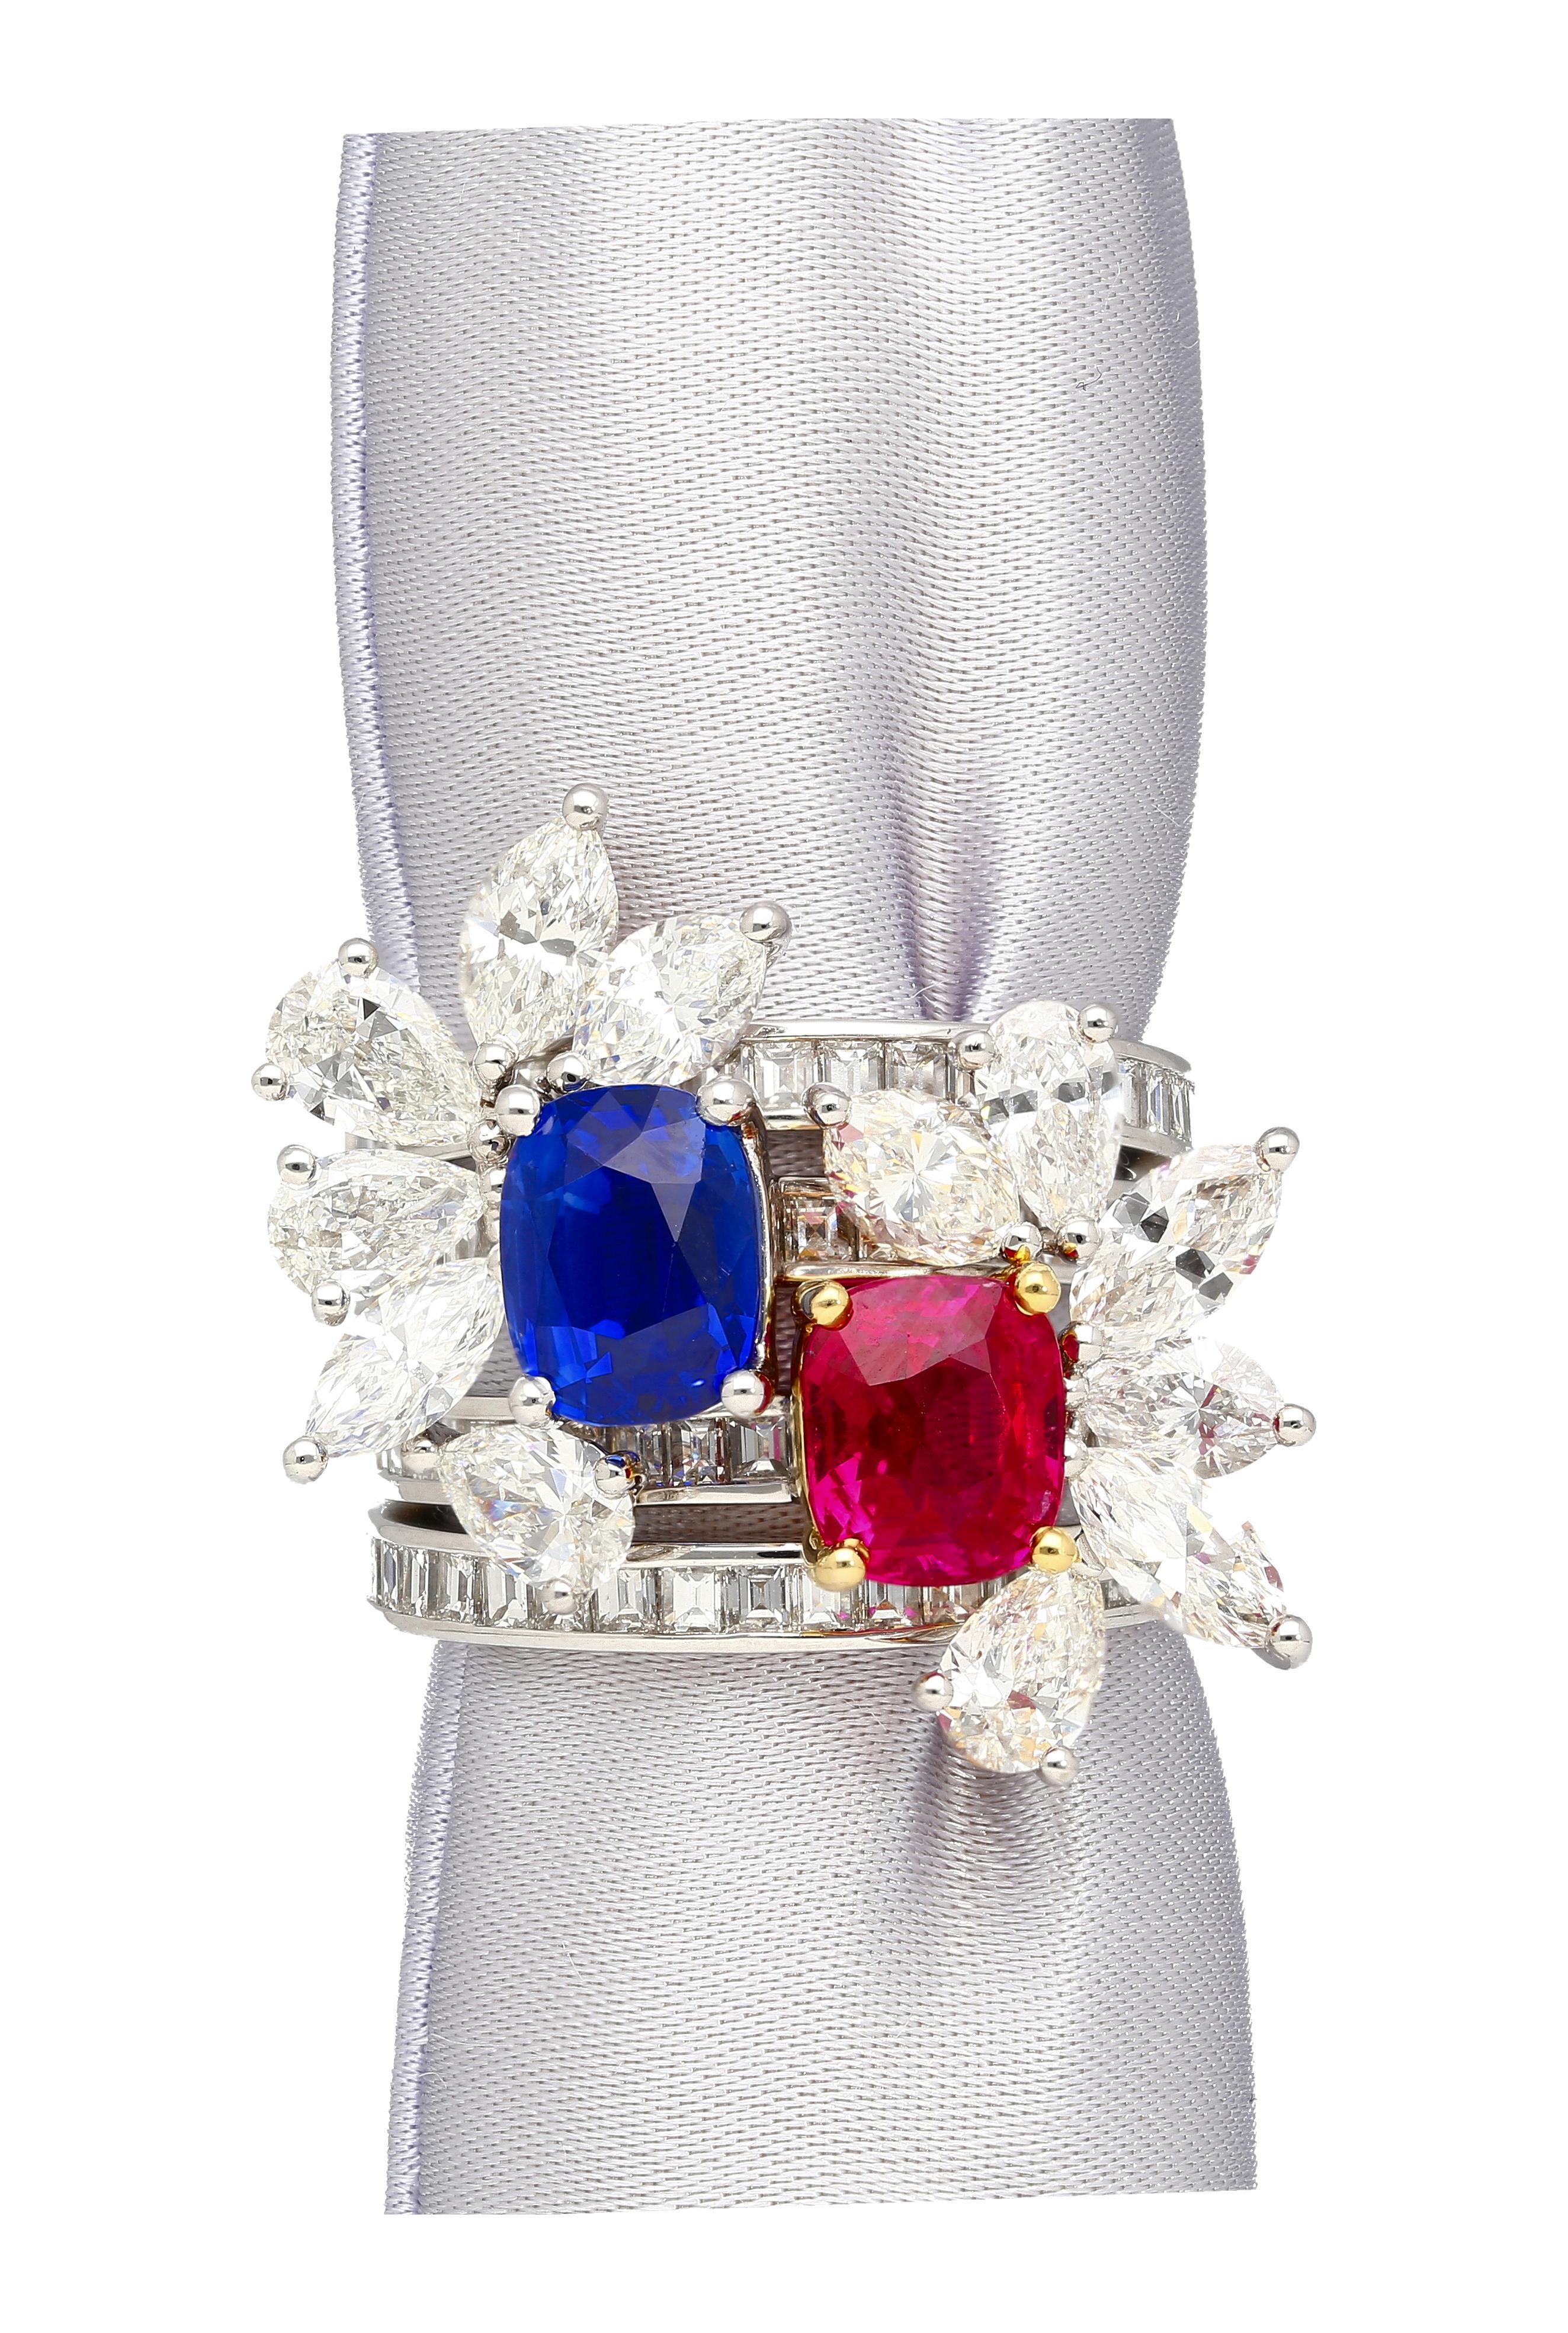 AGL Certified 8 Carat No Heat Kashmir Sapphire, Burma Ruby, & Diamond Stack Ring For Sale 3